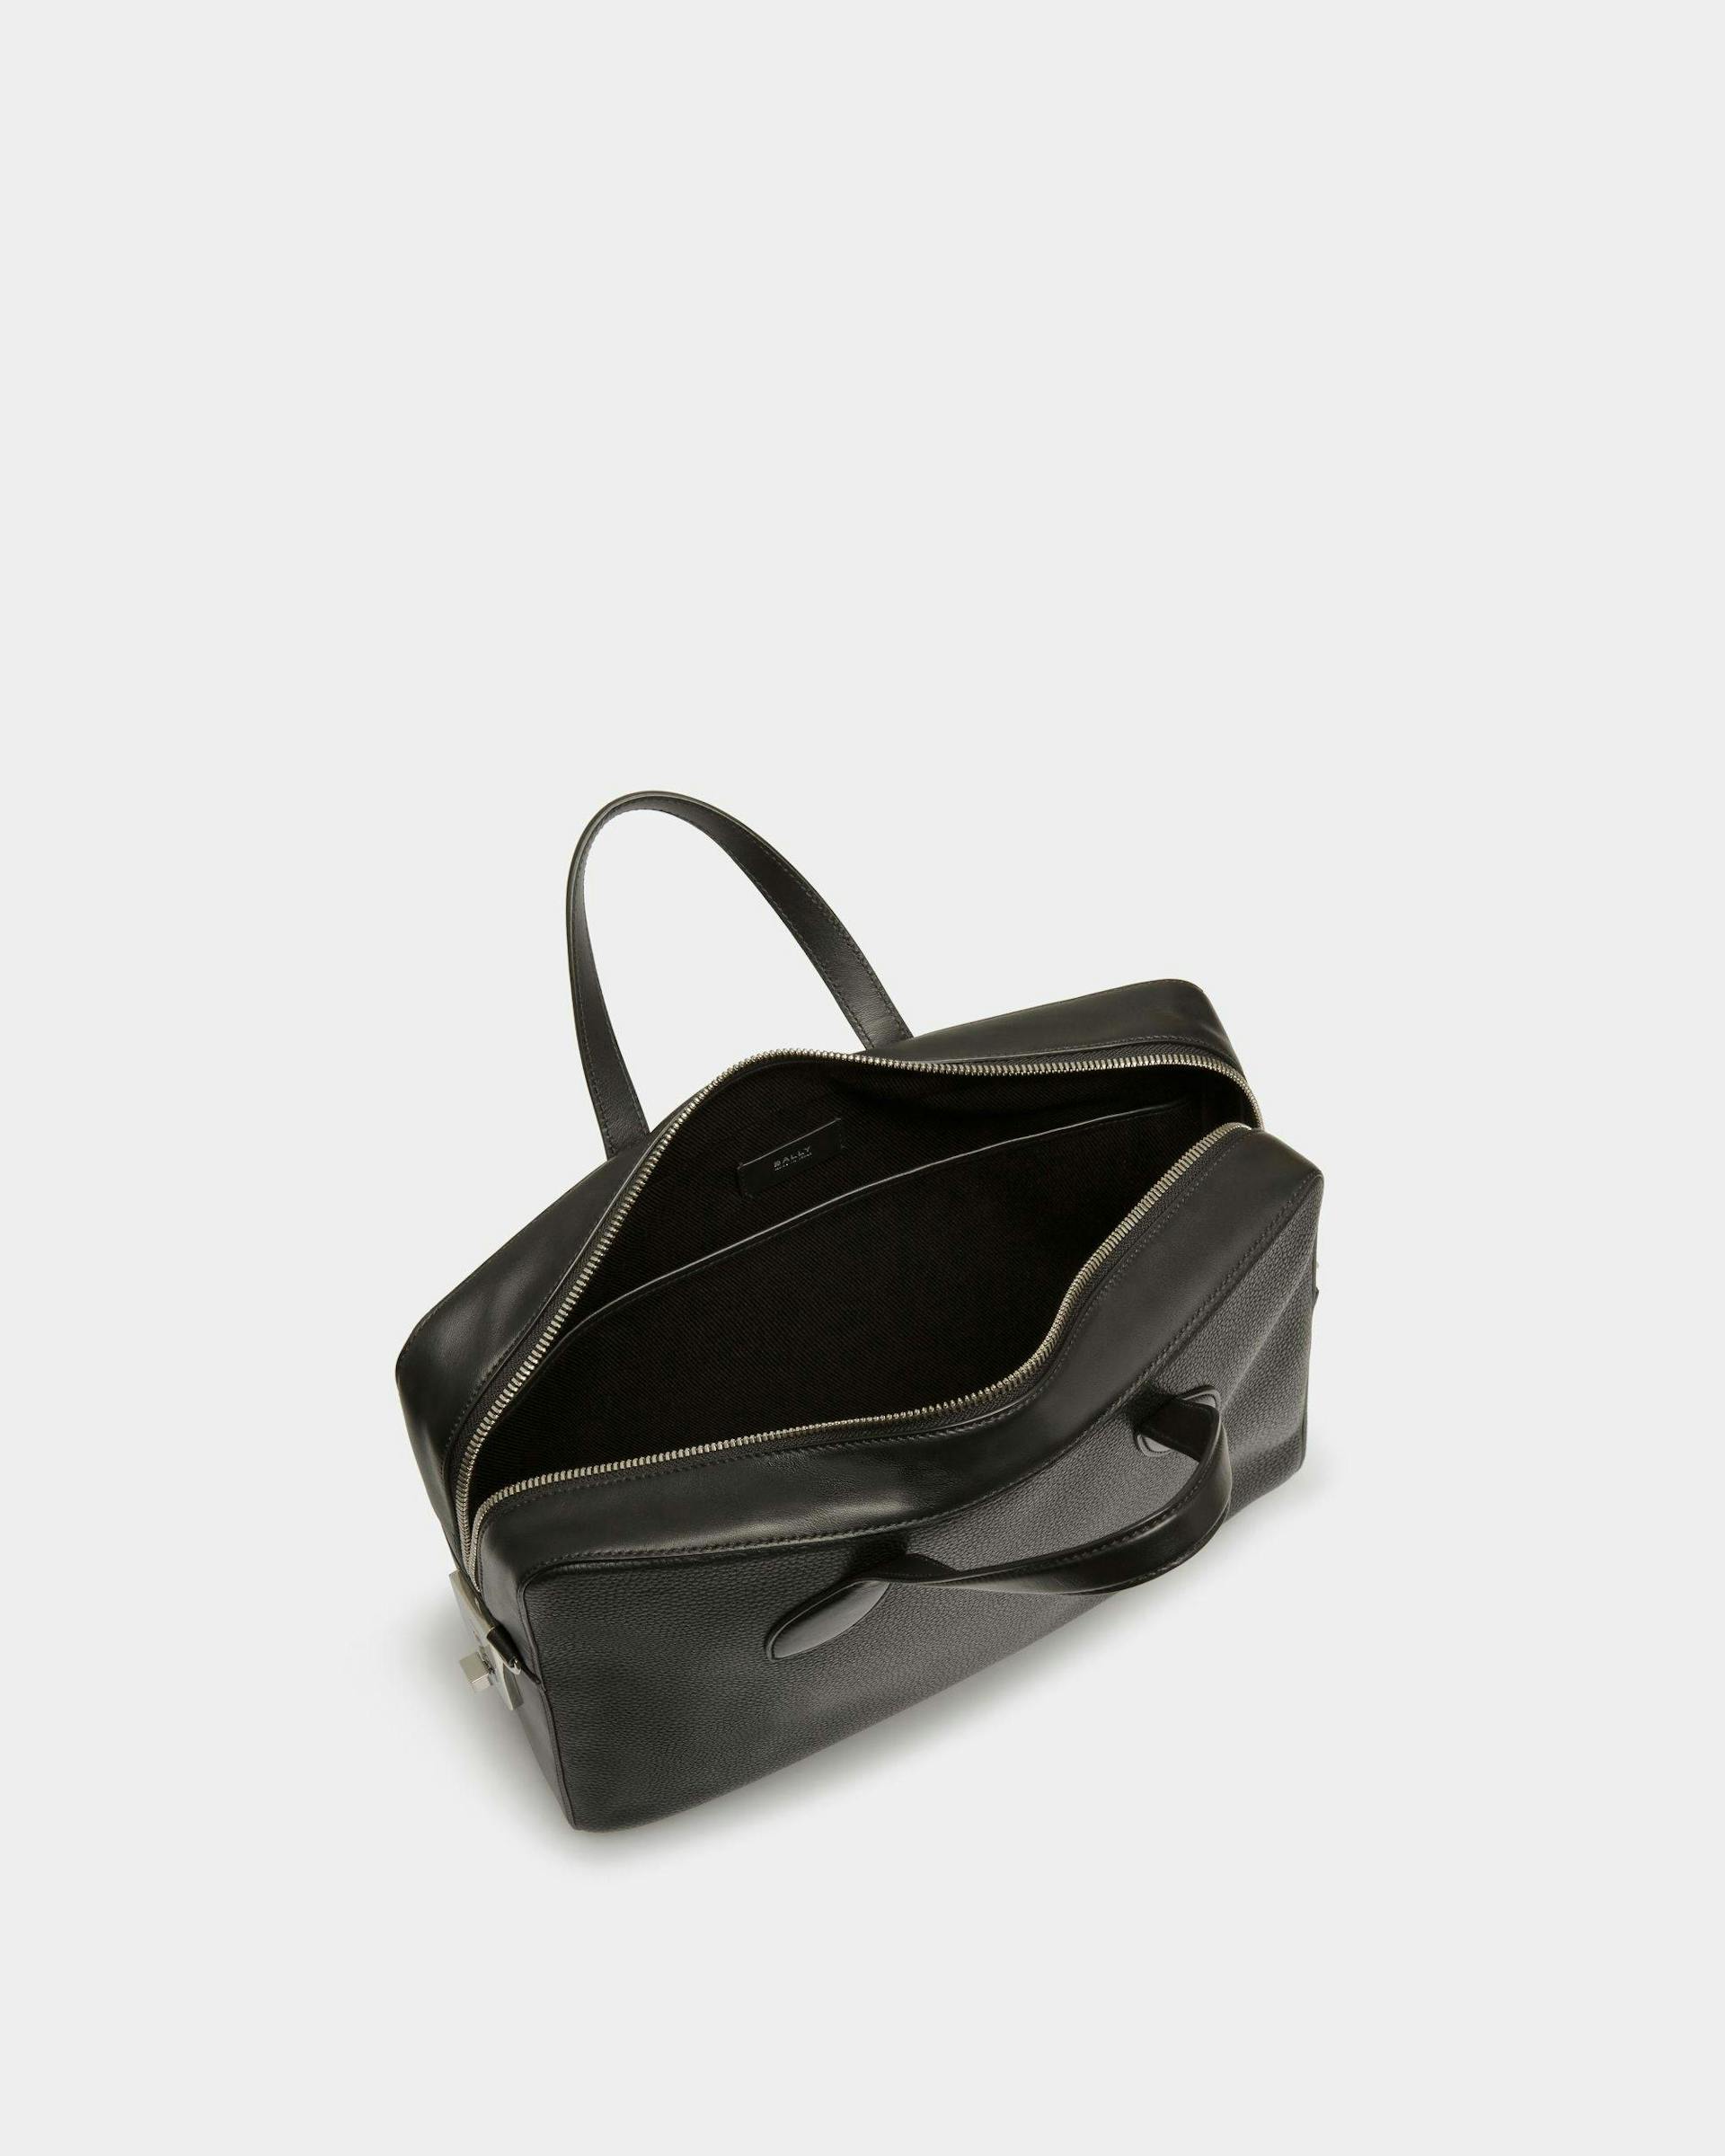 Men's Lago Briefcase In Black Leather | Bally | Still Life Open / Inside